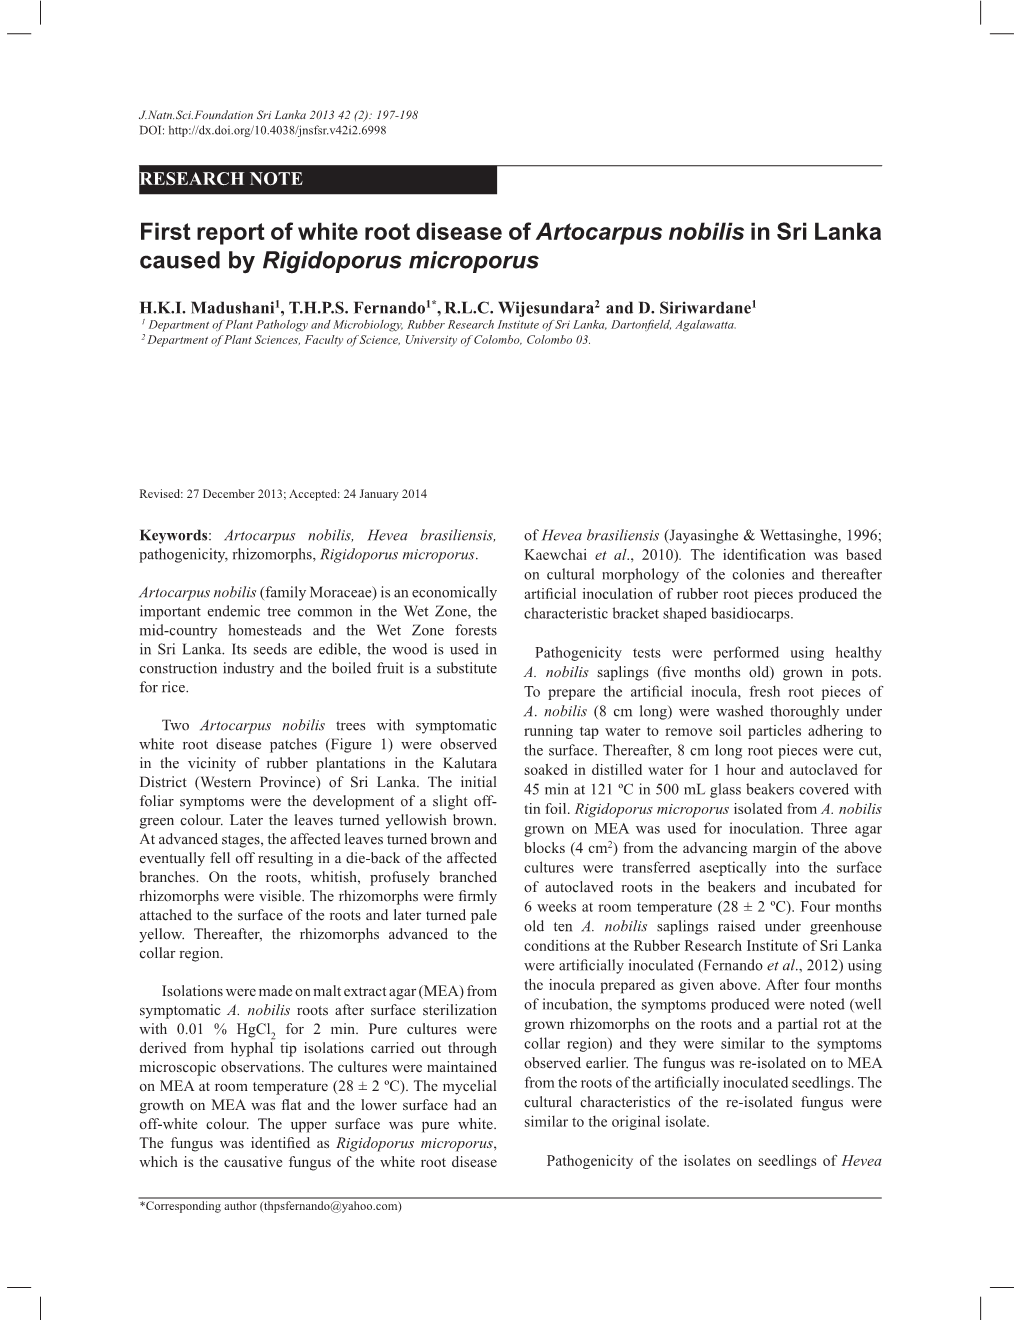 First Report of White Root Disease of Artocarpus Nobilis in Sri Lanka Caused by Rigidoporus Microporus